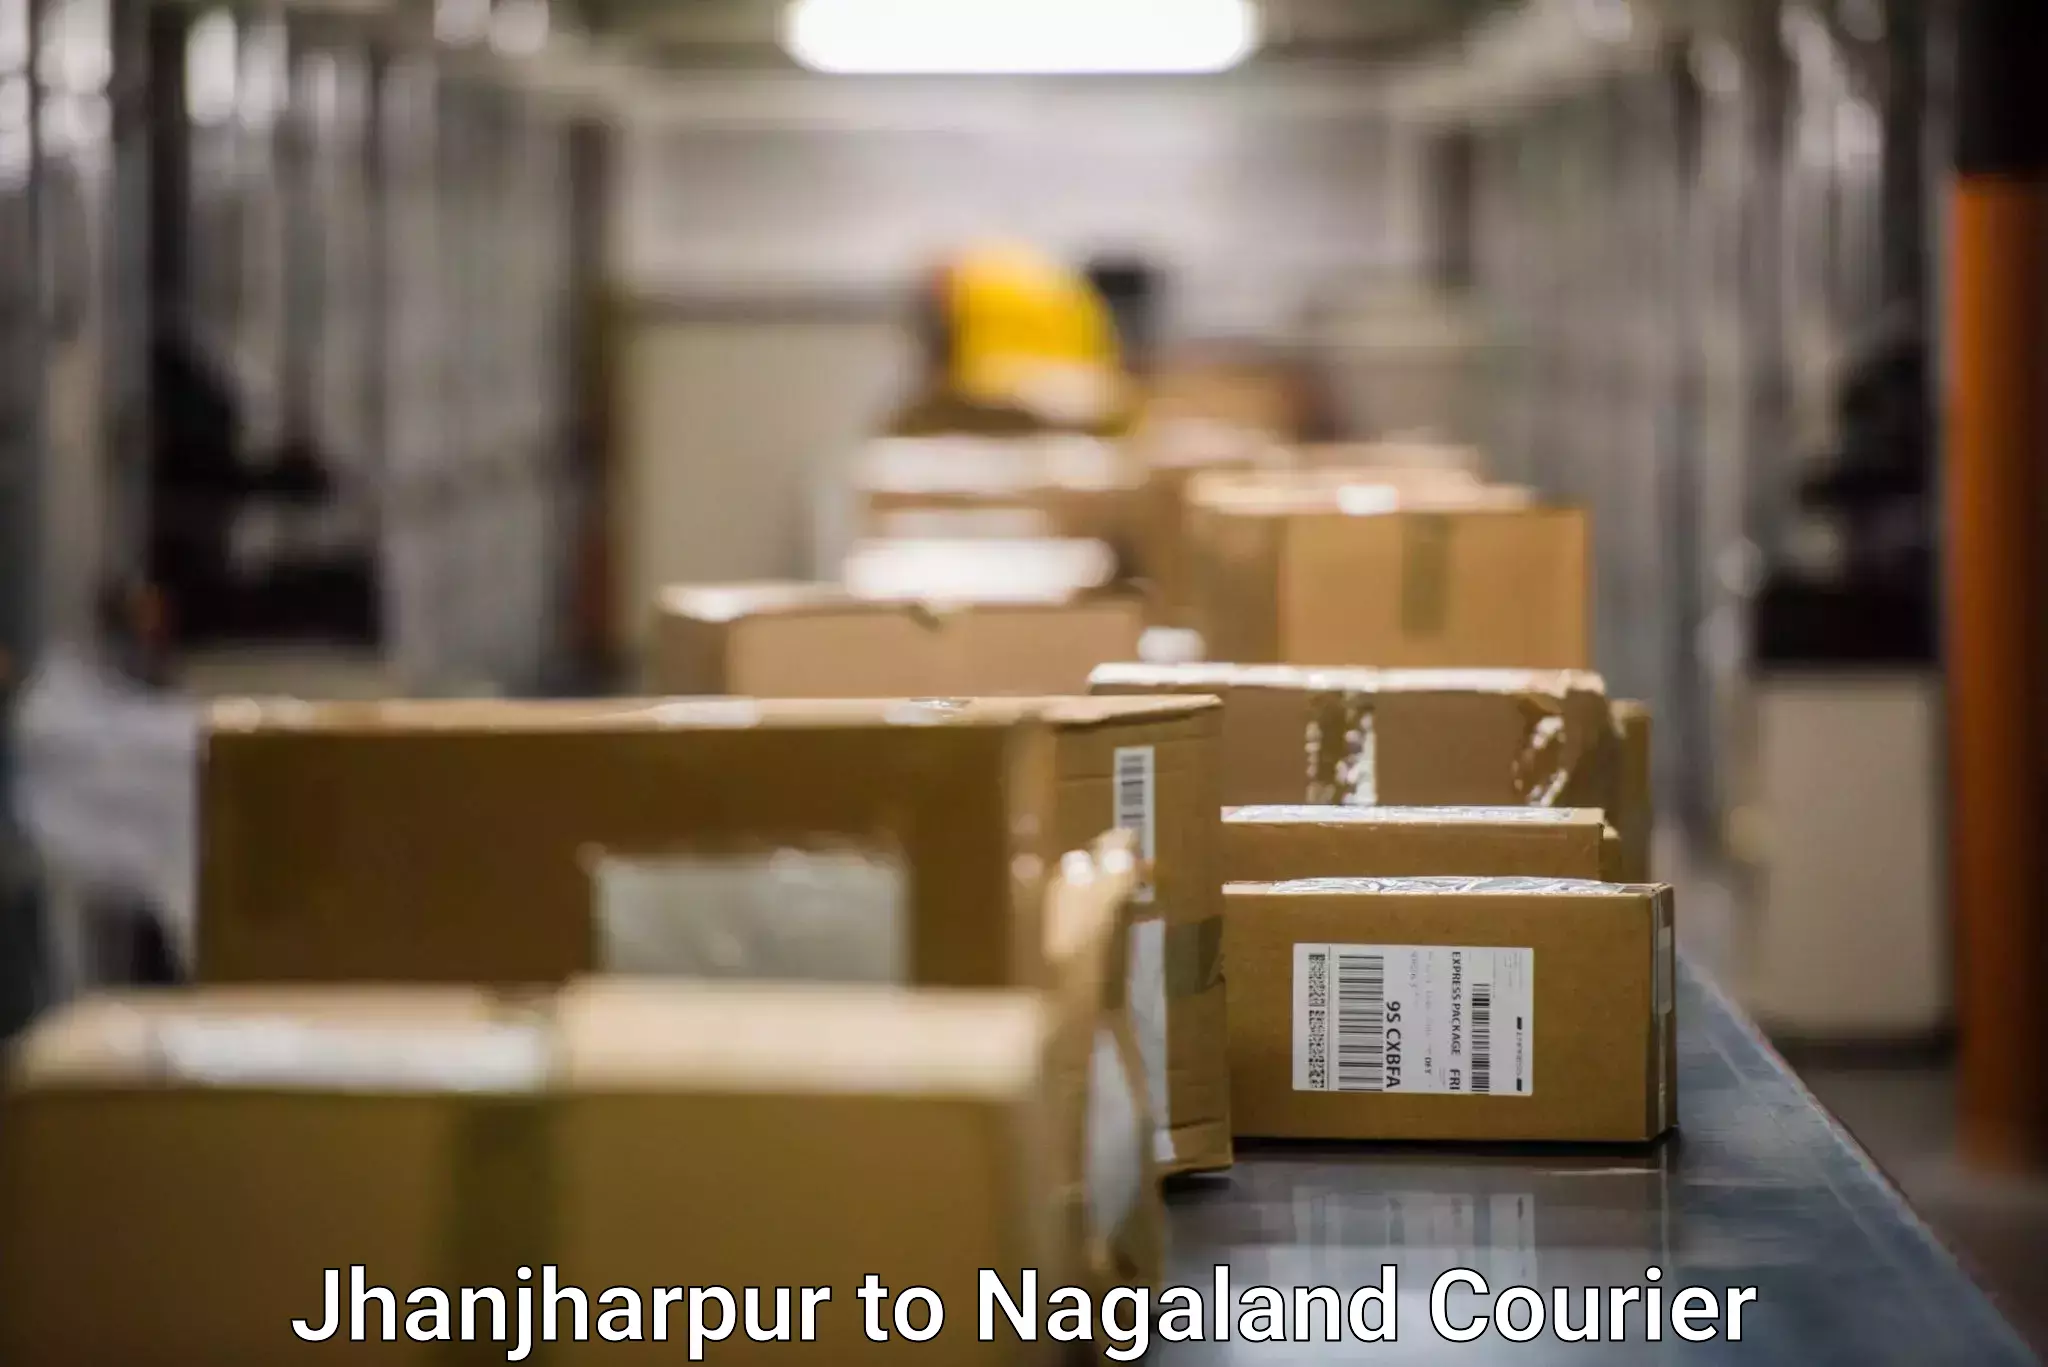 Seamless shipping experience Jhanjharpur to Nagaland